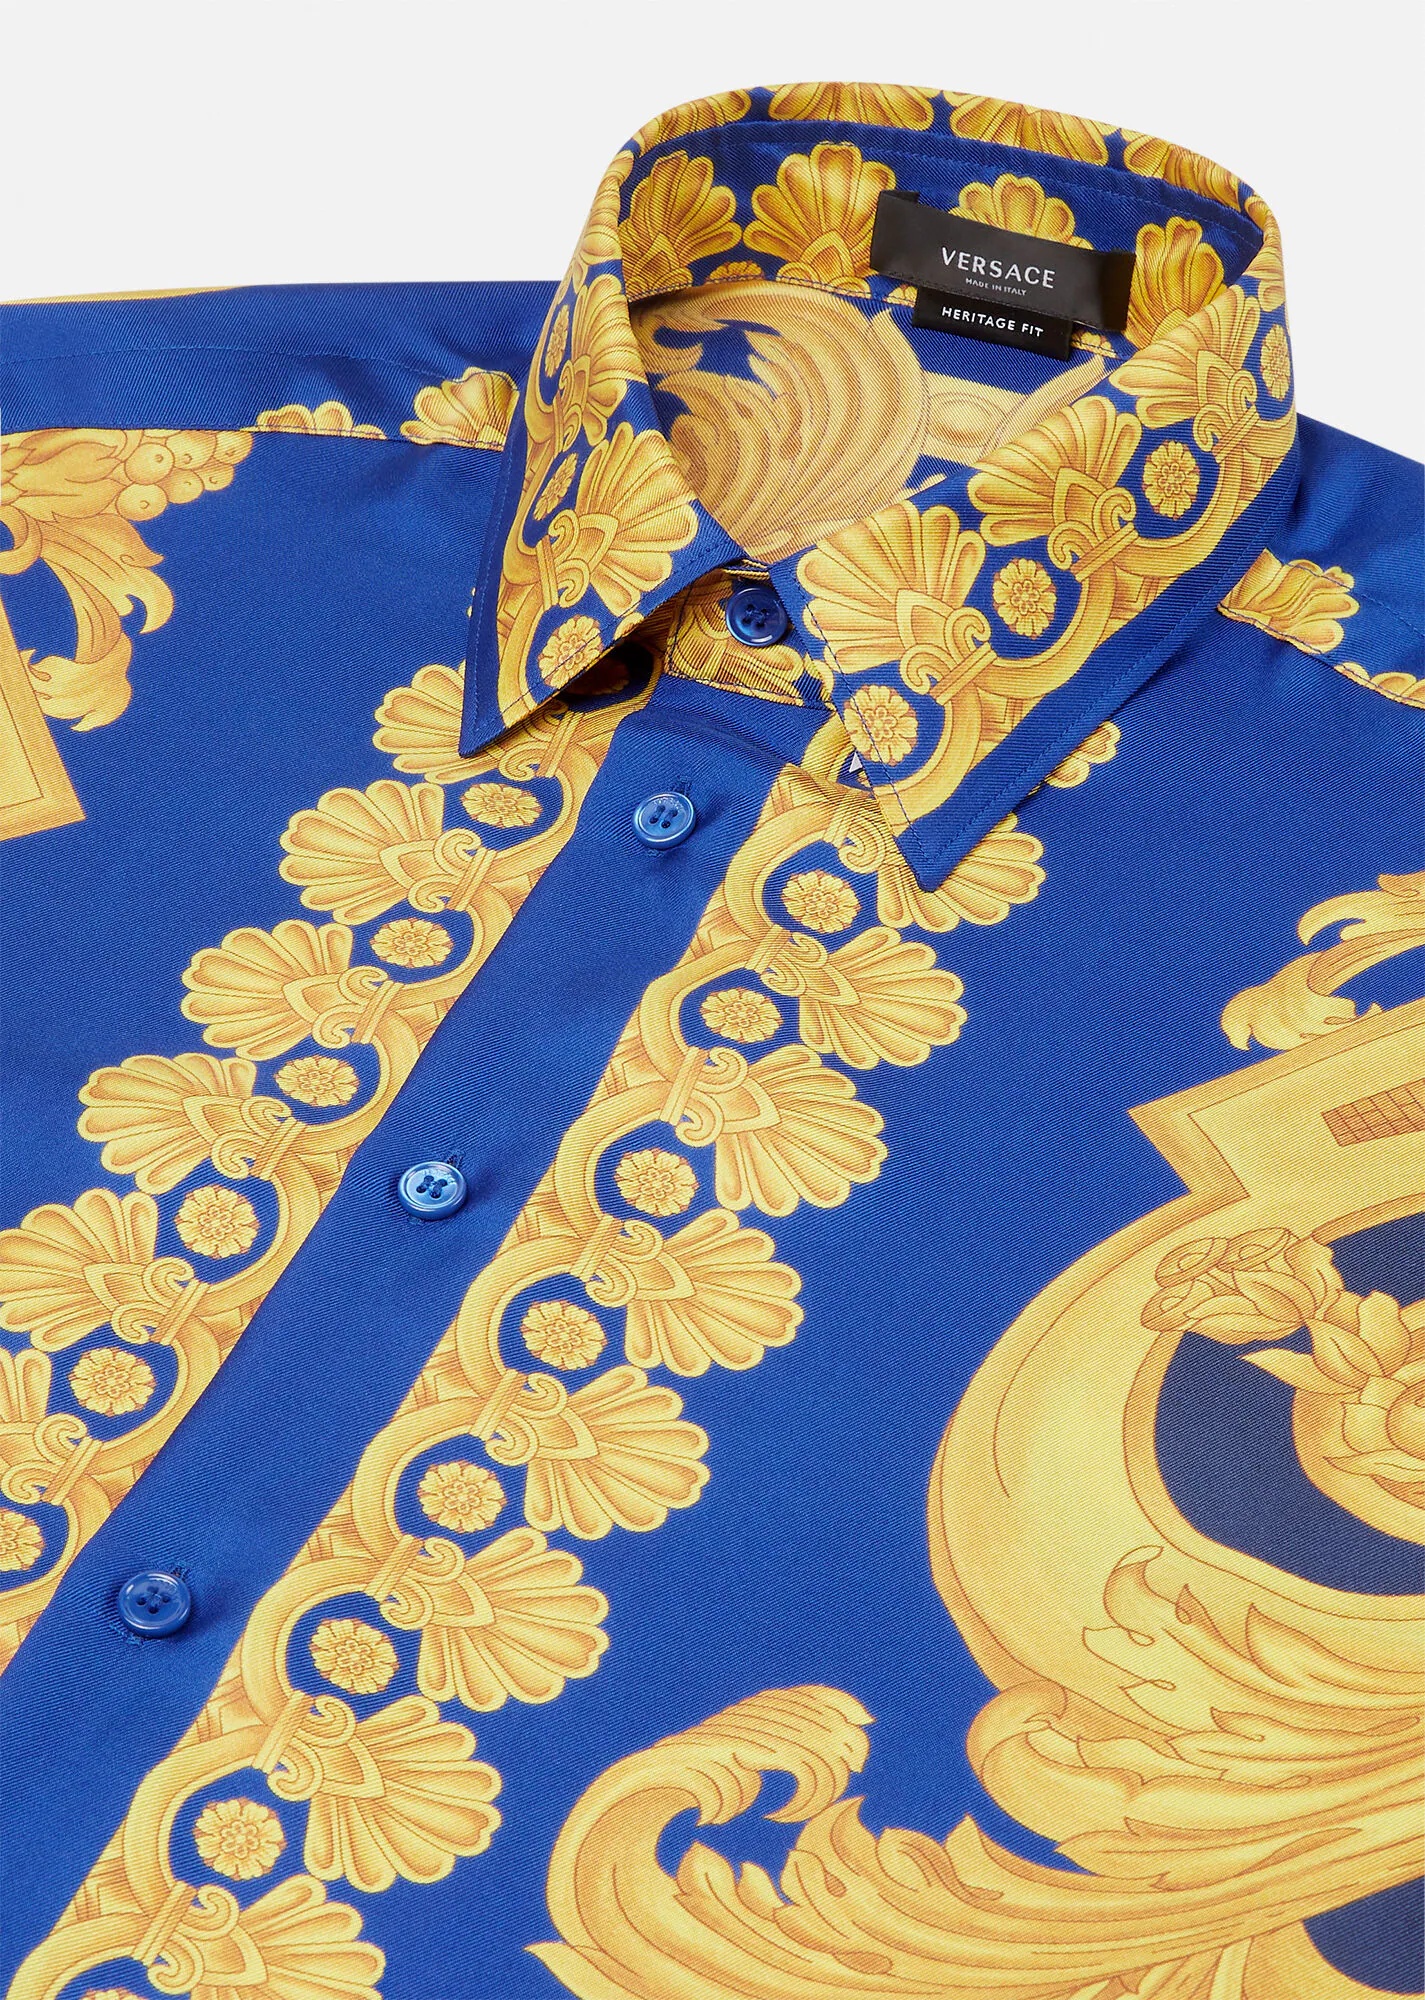 Barocco print silk shirt, Versace